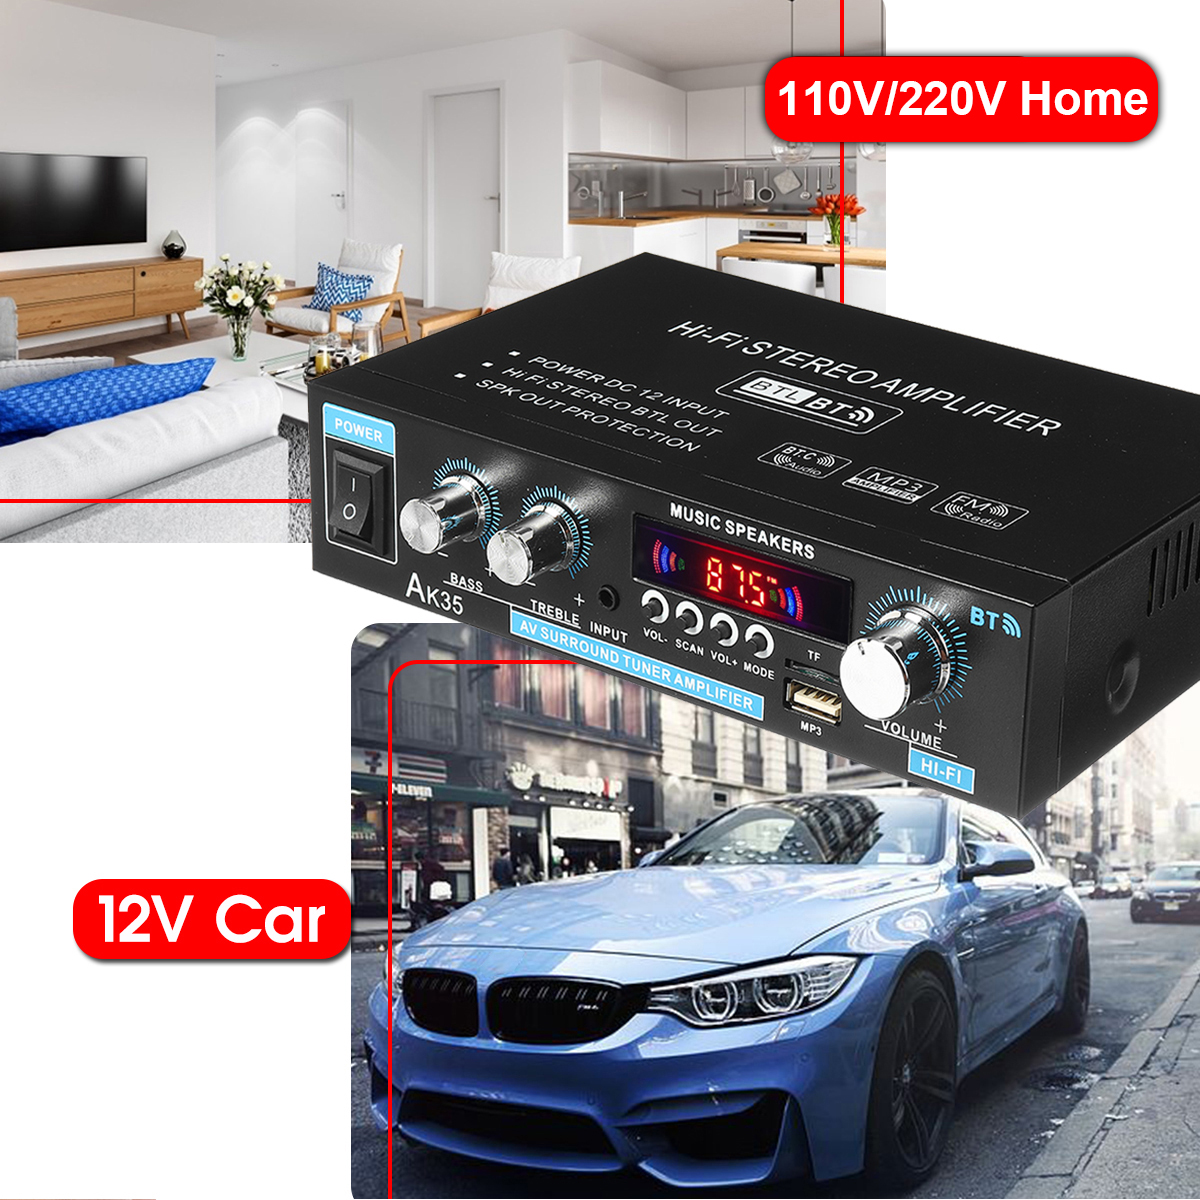 AK35 2x30W Digital HIFI Power Amplifier bluetooth 5.0 USB FM TF Card Stereo Home Theater Car Audio 110V 220V AMP with Remote Control